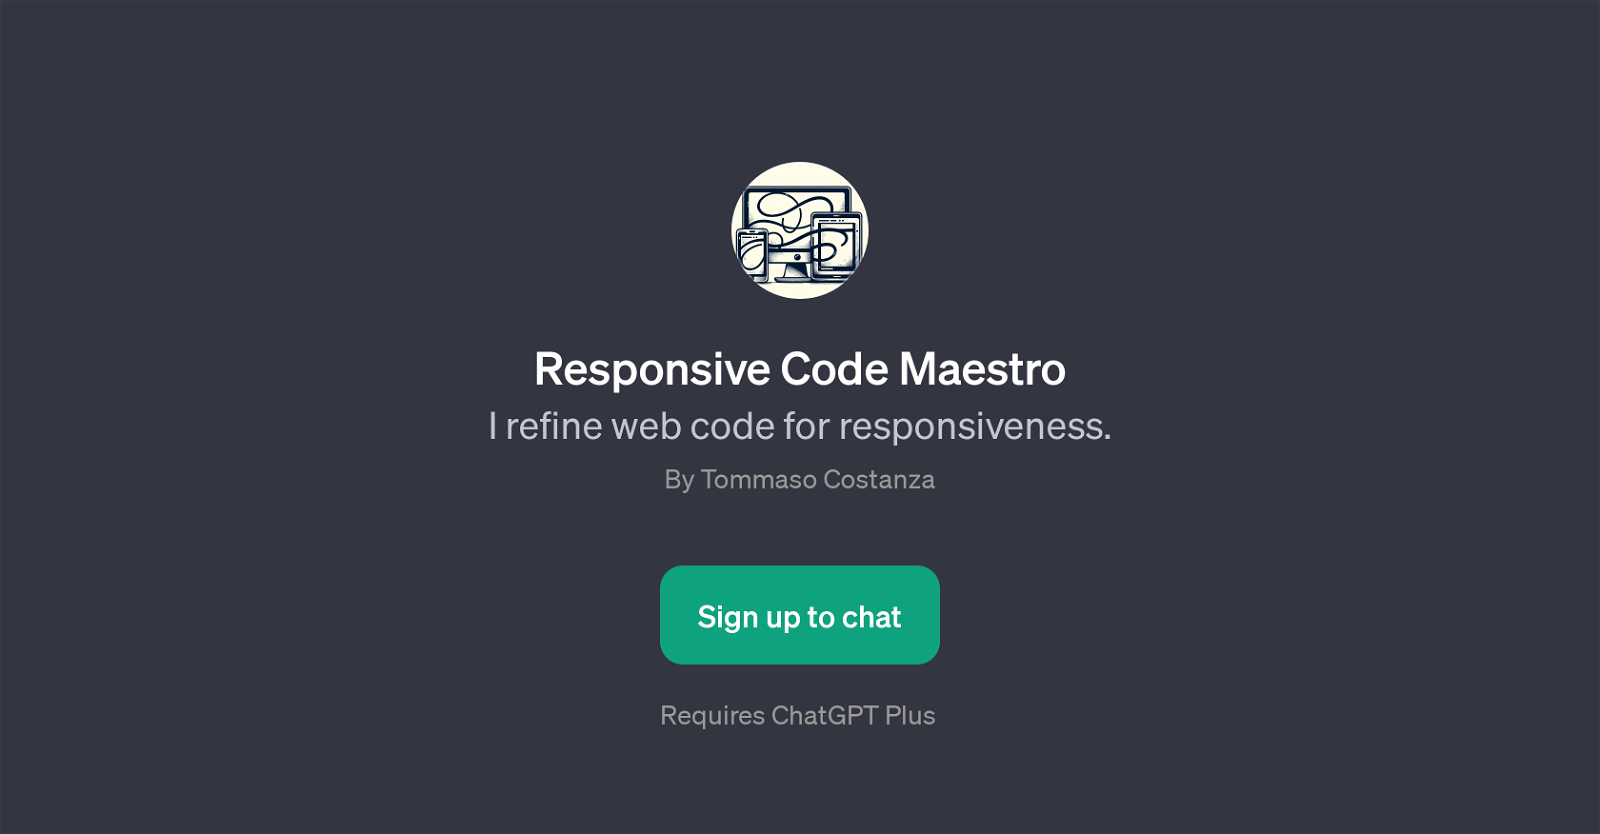 Responsive Code Maestro website